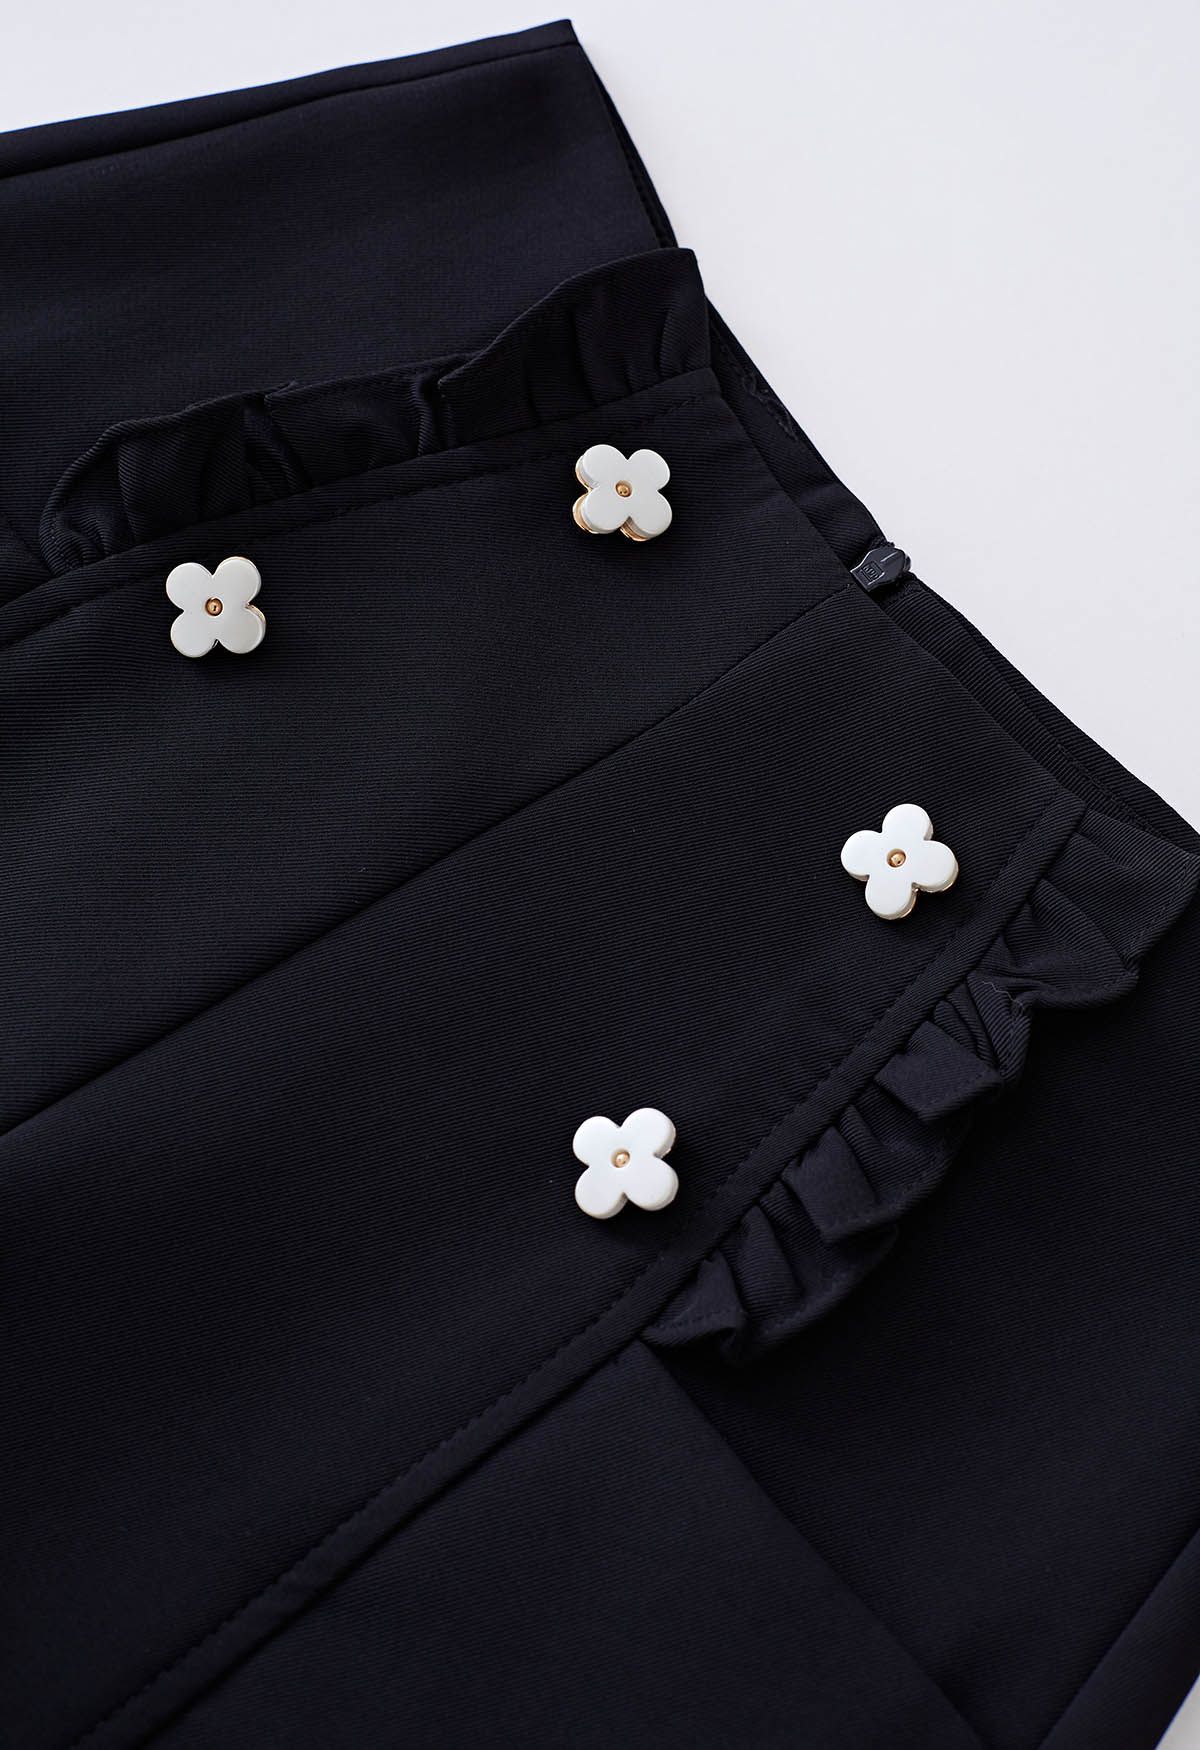 Adorable Flower Ruffle Trim Shorts in Black